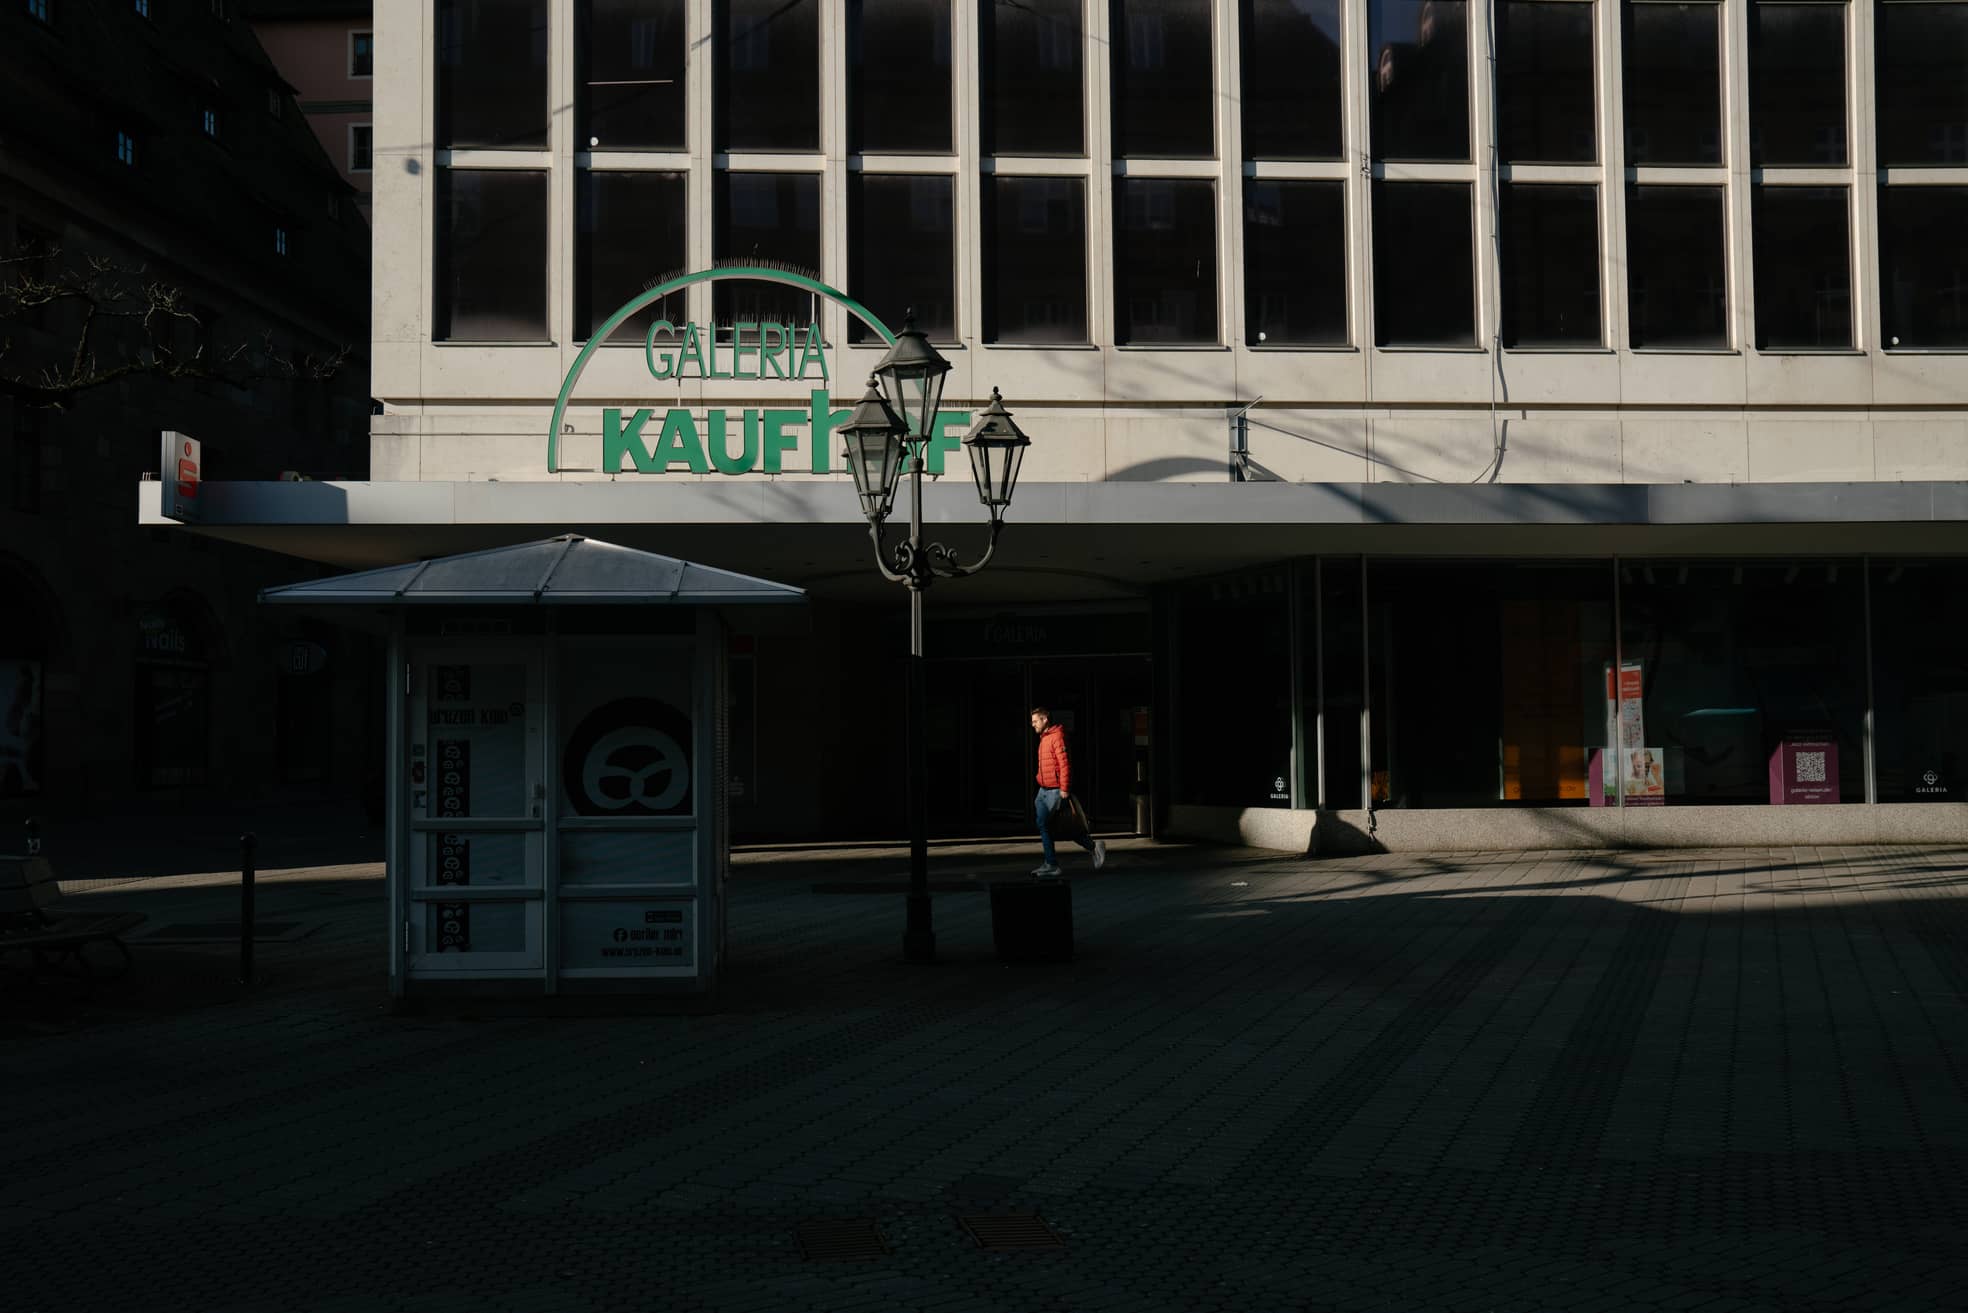 Galeria Kaufhof in Nürnberg